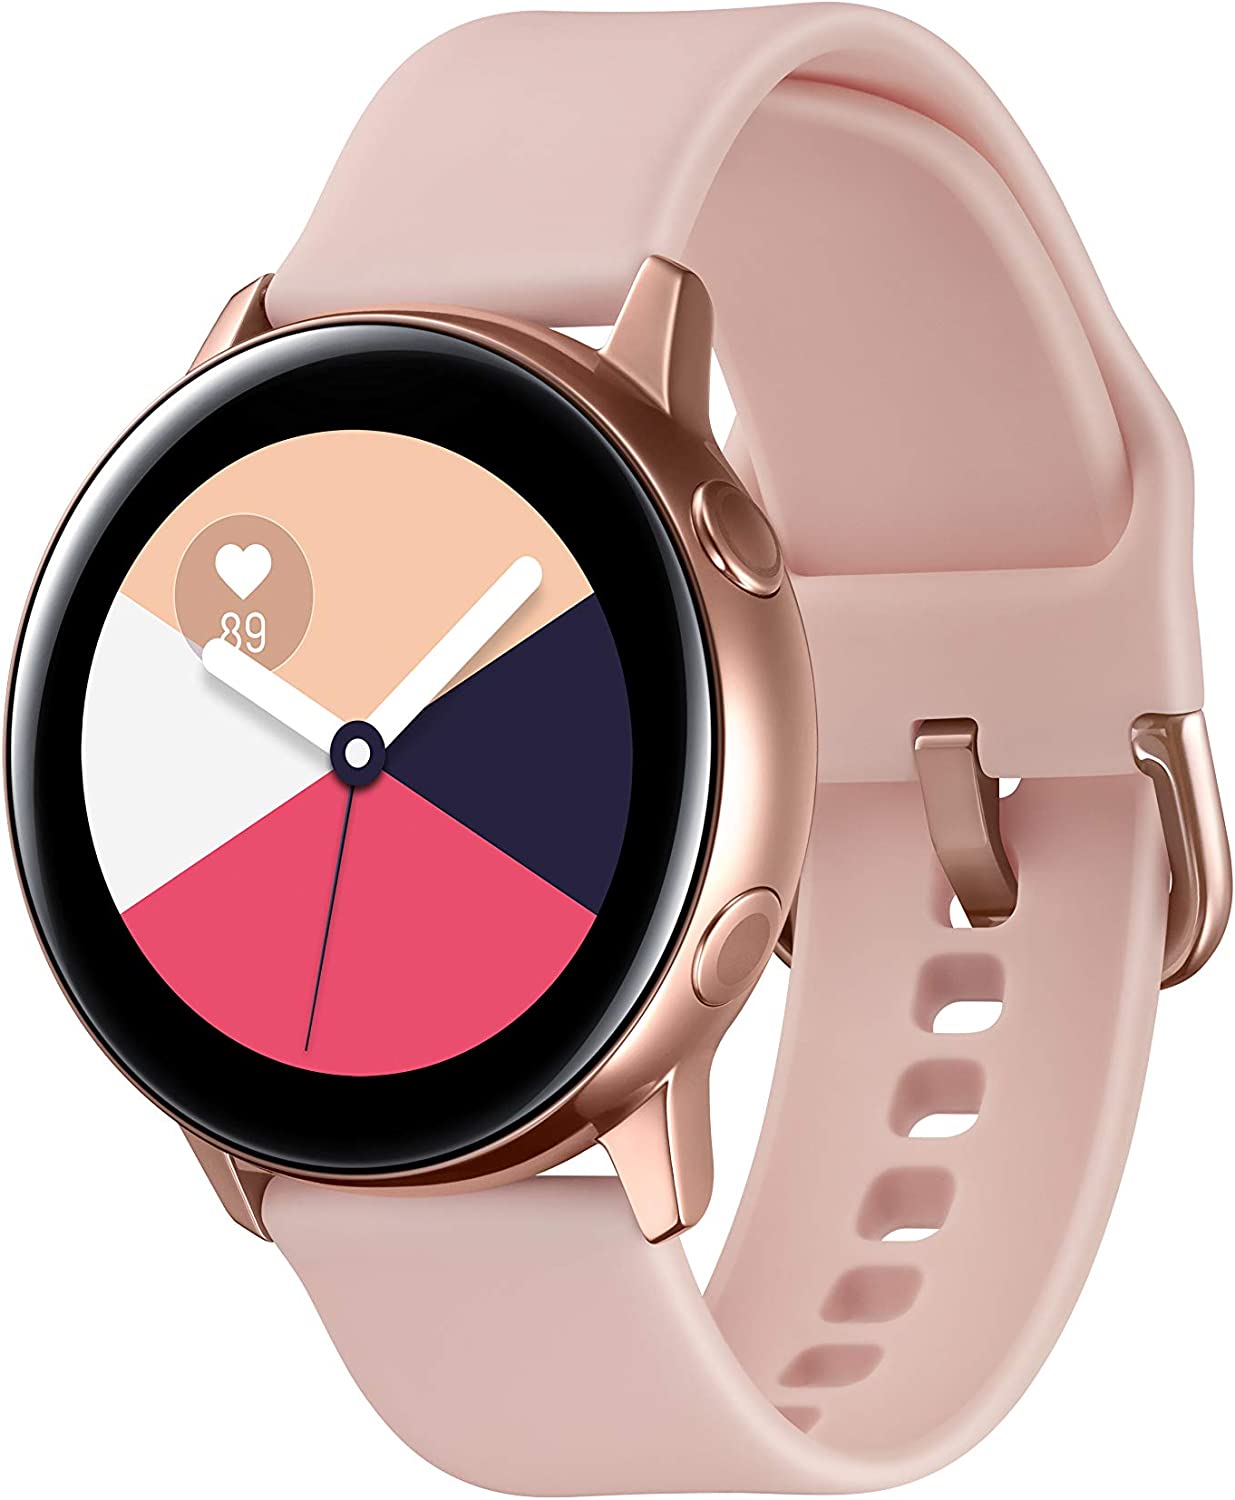 Samsung - SM-R500NZDAXAR Galaxy Watch Active Smartwatch 40mm Aluminum - Rose Gold